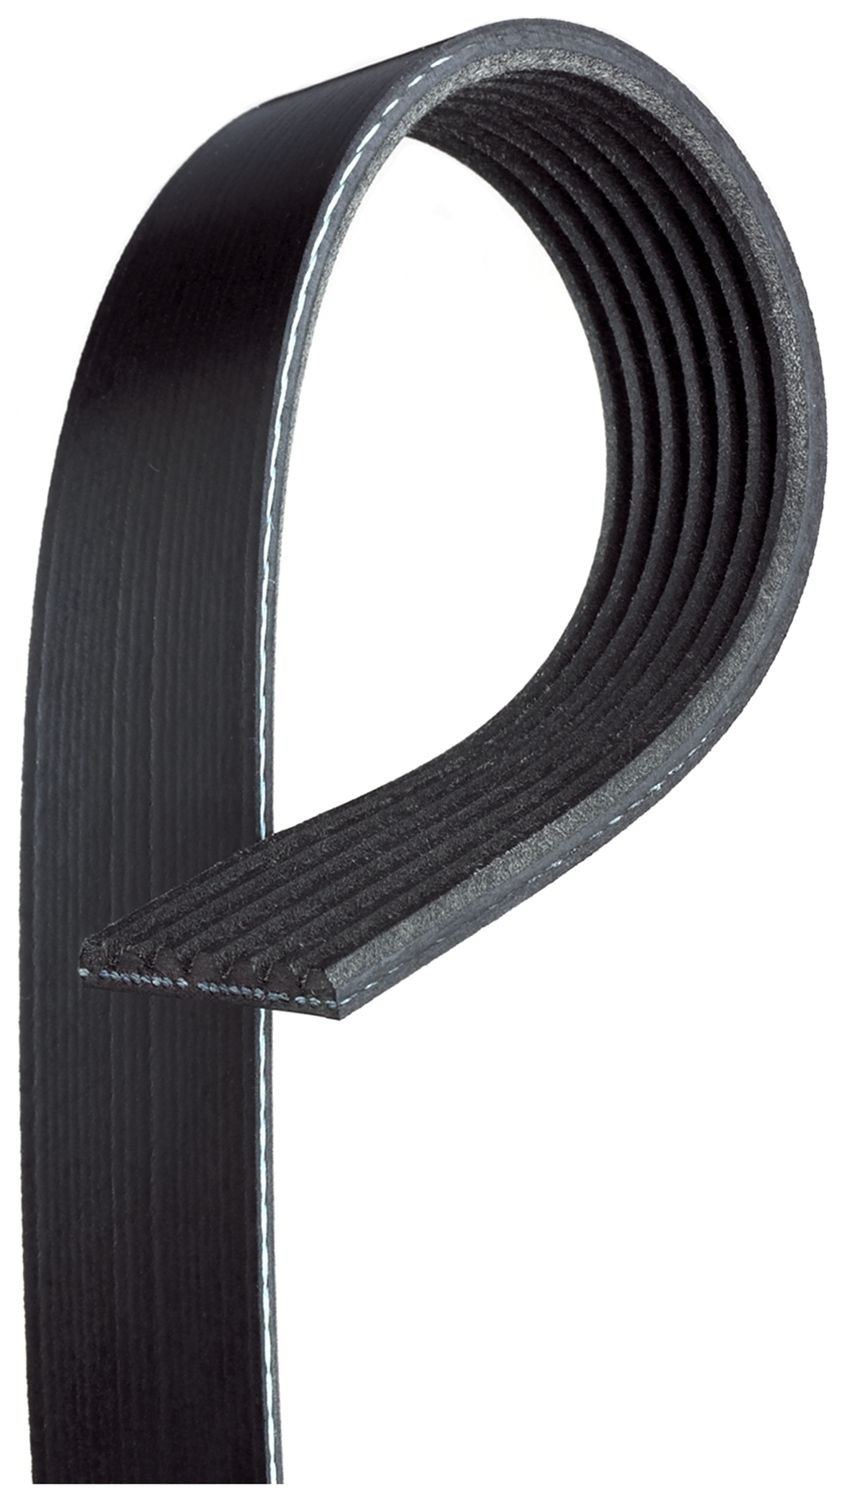 7PK1870 GATES Alternator belt LEXUS 1870mm, 7, G-Force™ C12™ CVT Belt